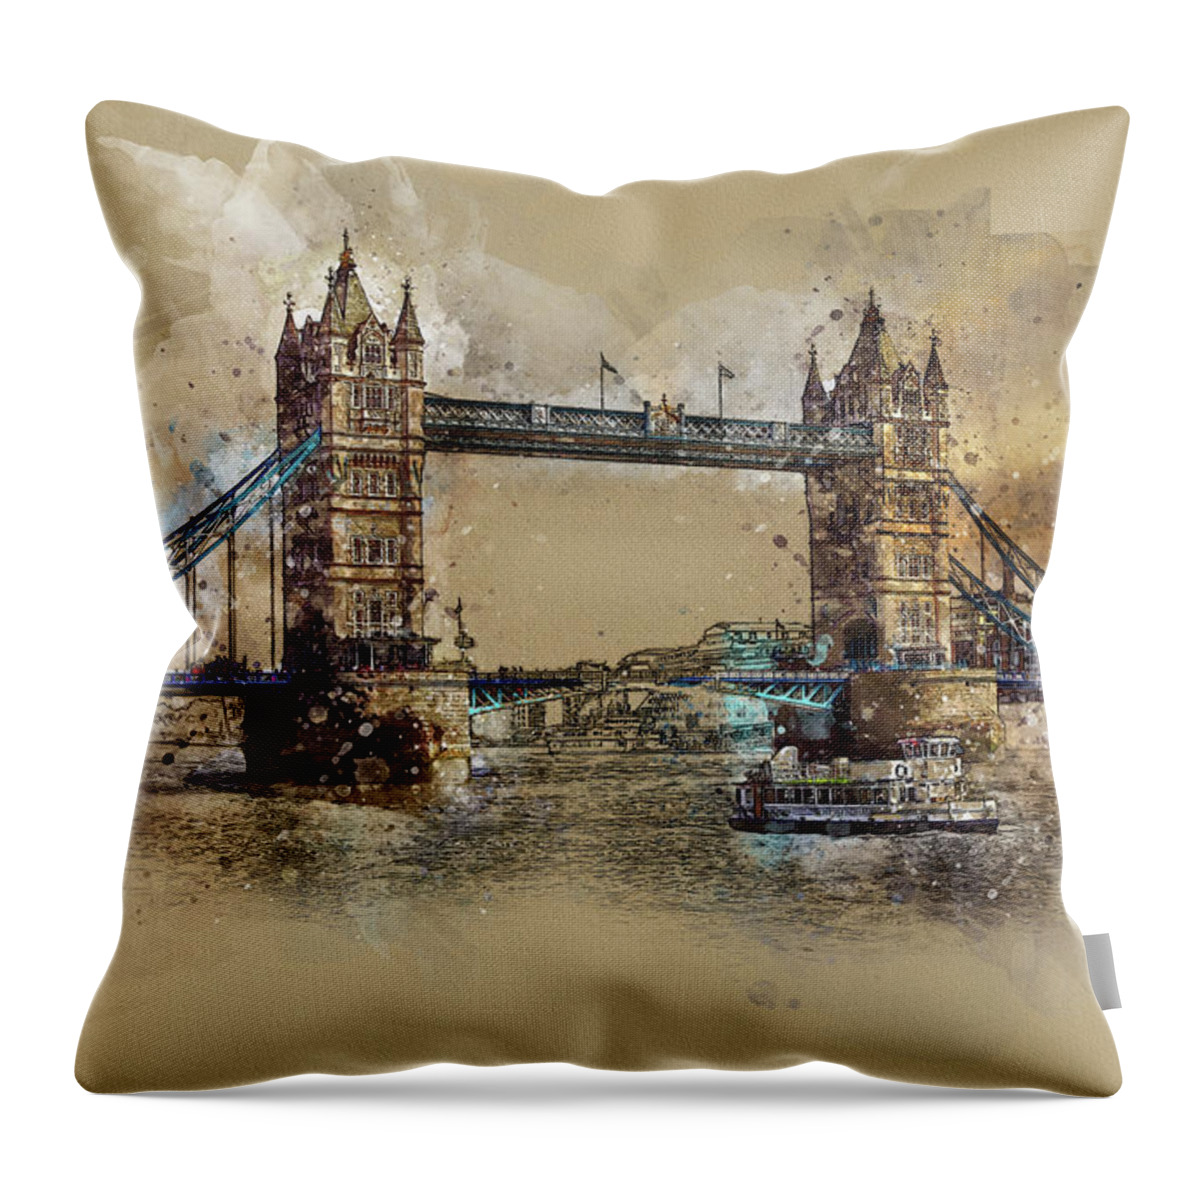 Tower Bridge Throw Pillow featuring the digital art Tower Bridge of London by Teresa Zieba